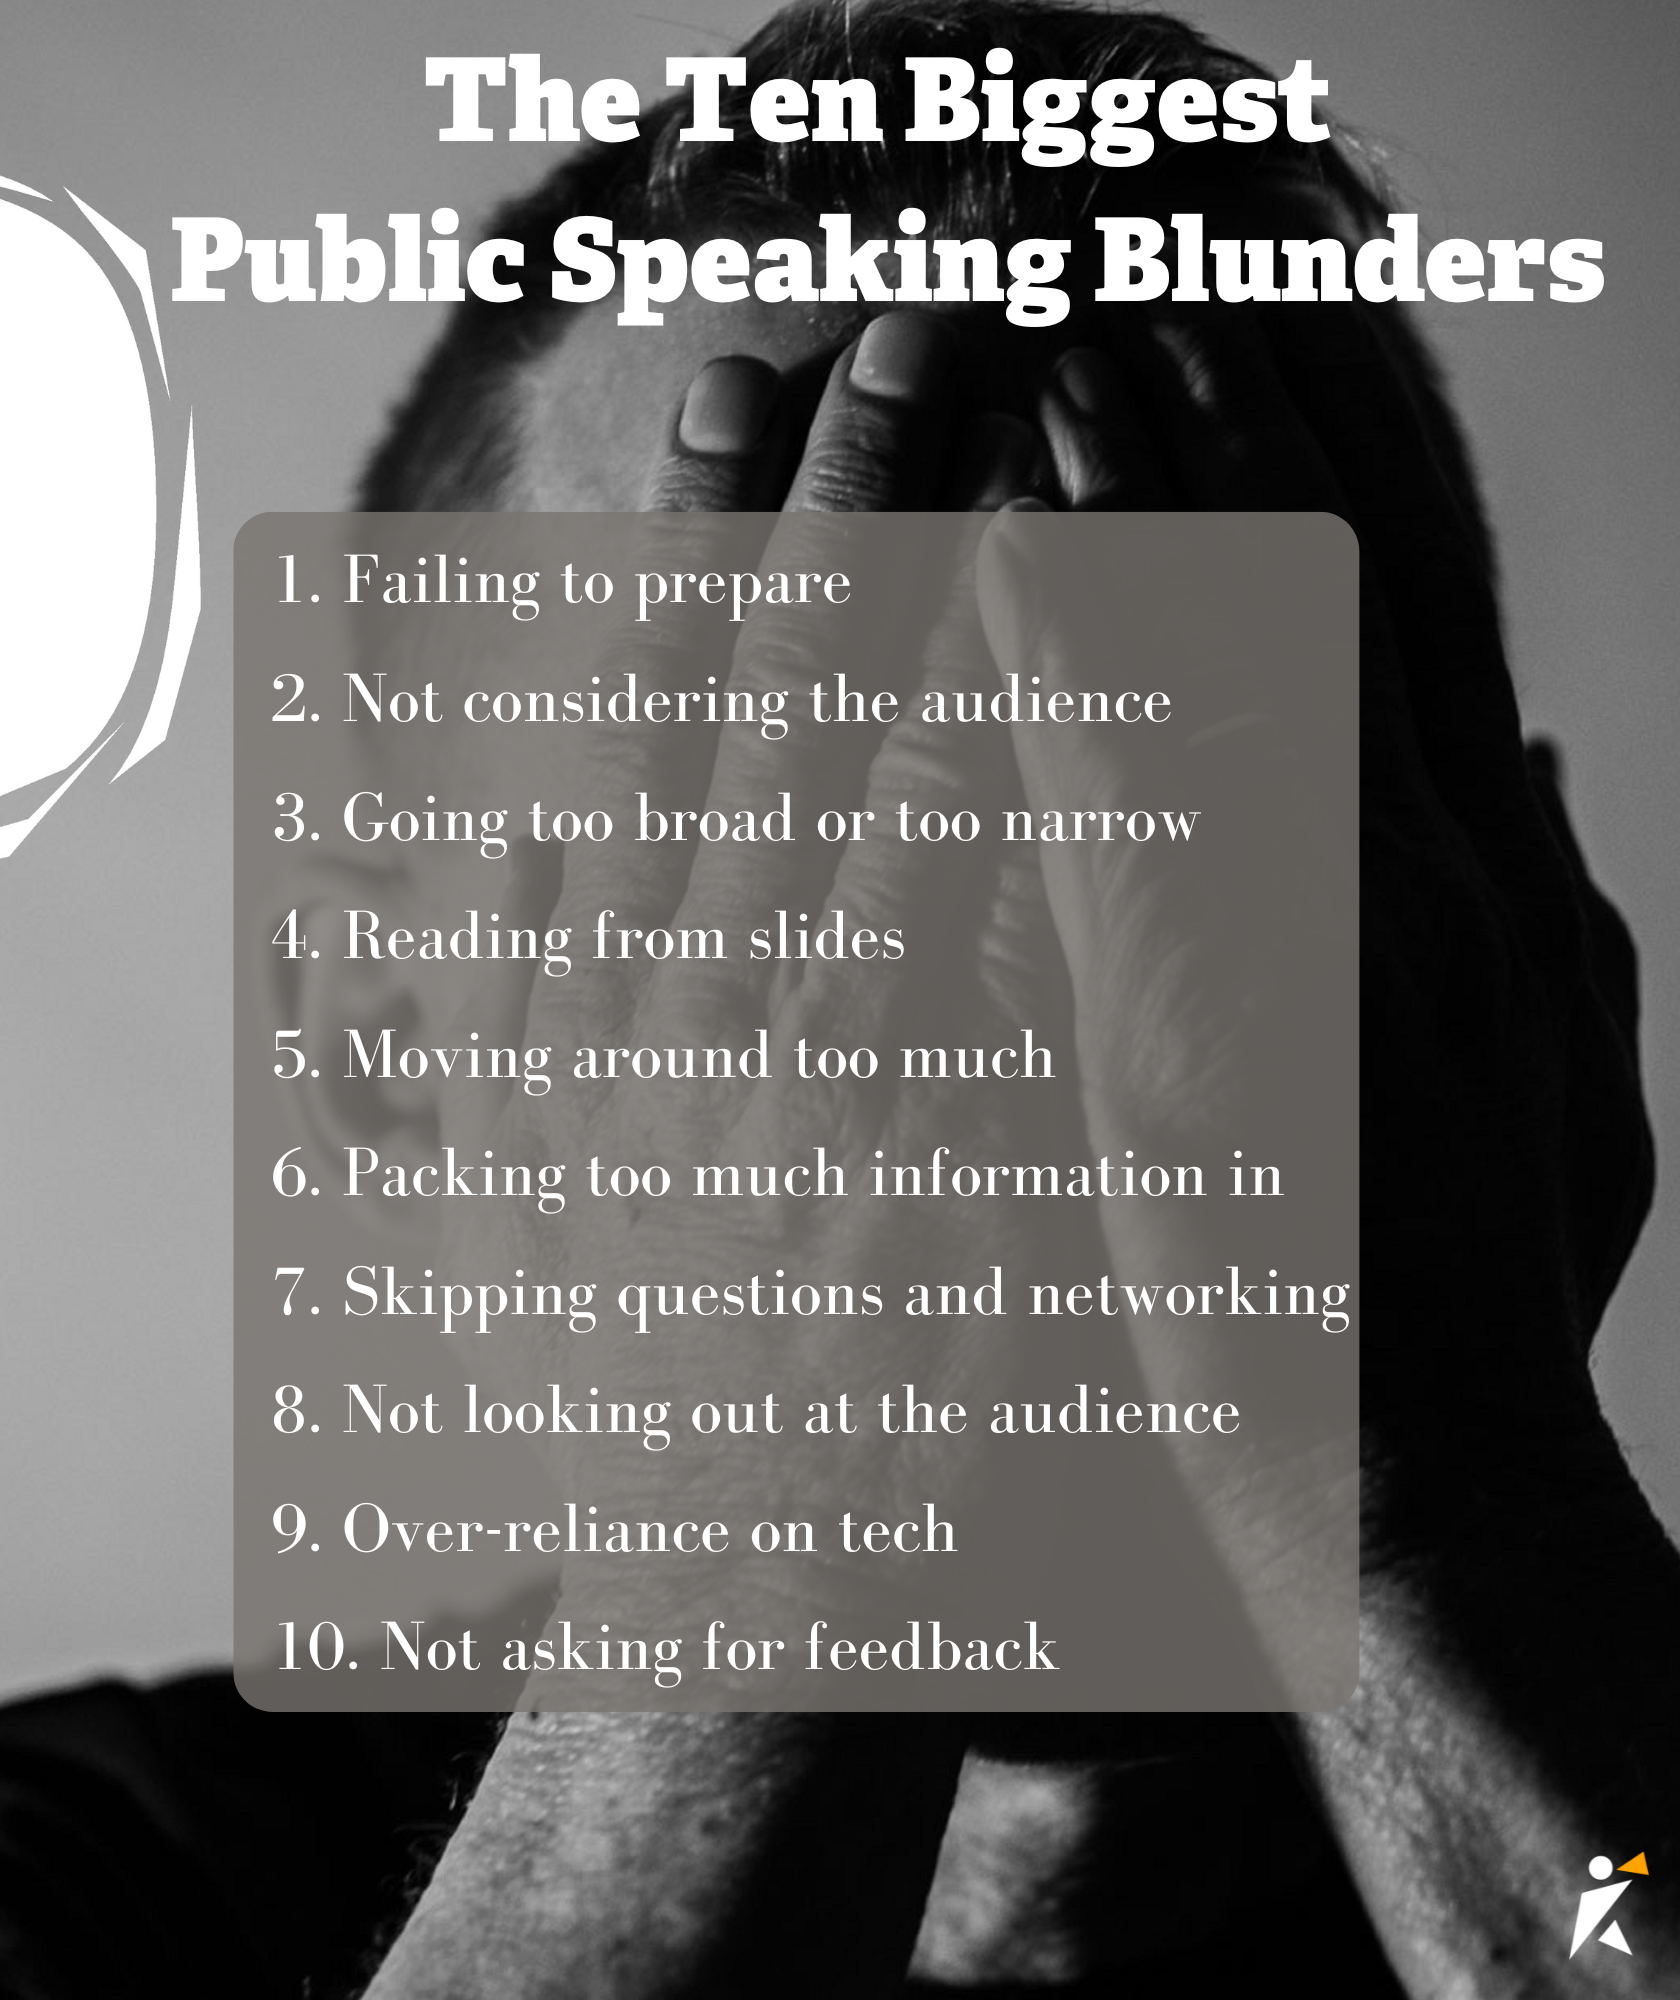 The Ten Biggest Public Speaking Blunders